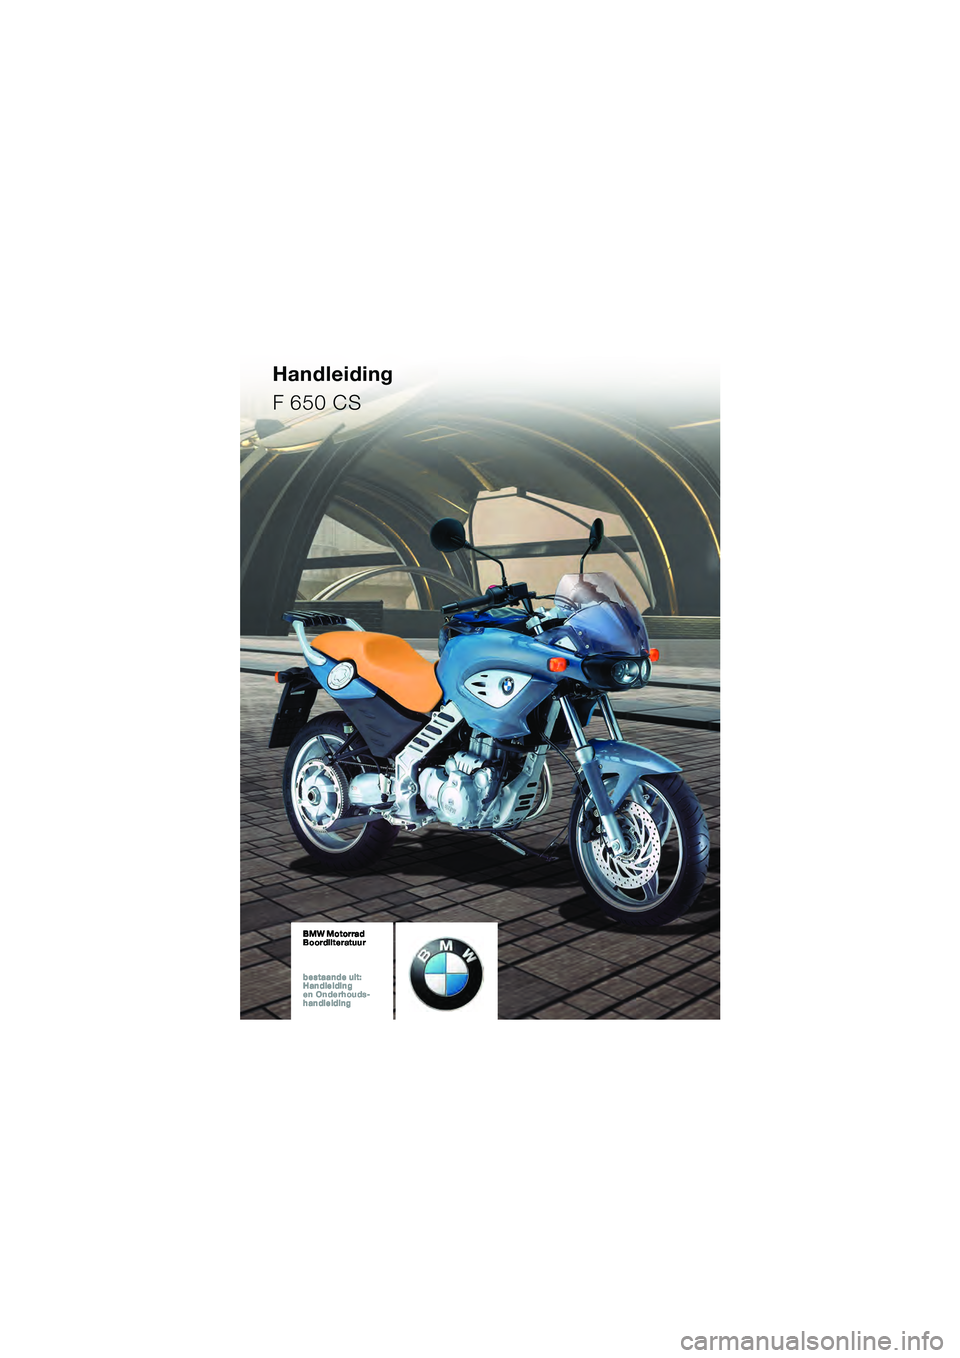 BMW MOTORRAD F 650 CS 2003  Handleiding (in Dutch) Handleiding
F 650 CS
10K14bkn2.book  Seite 1  Montag, 15. September 2003  1:08 13 